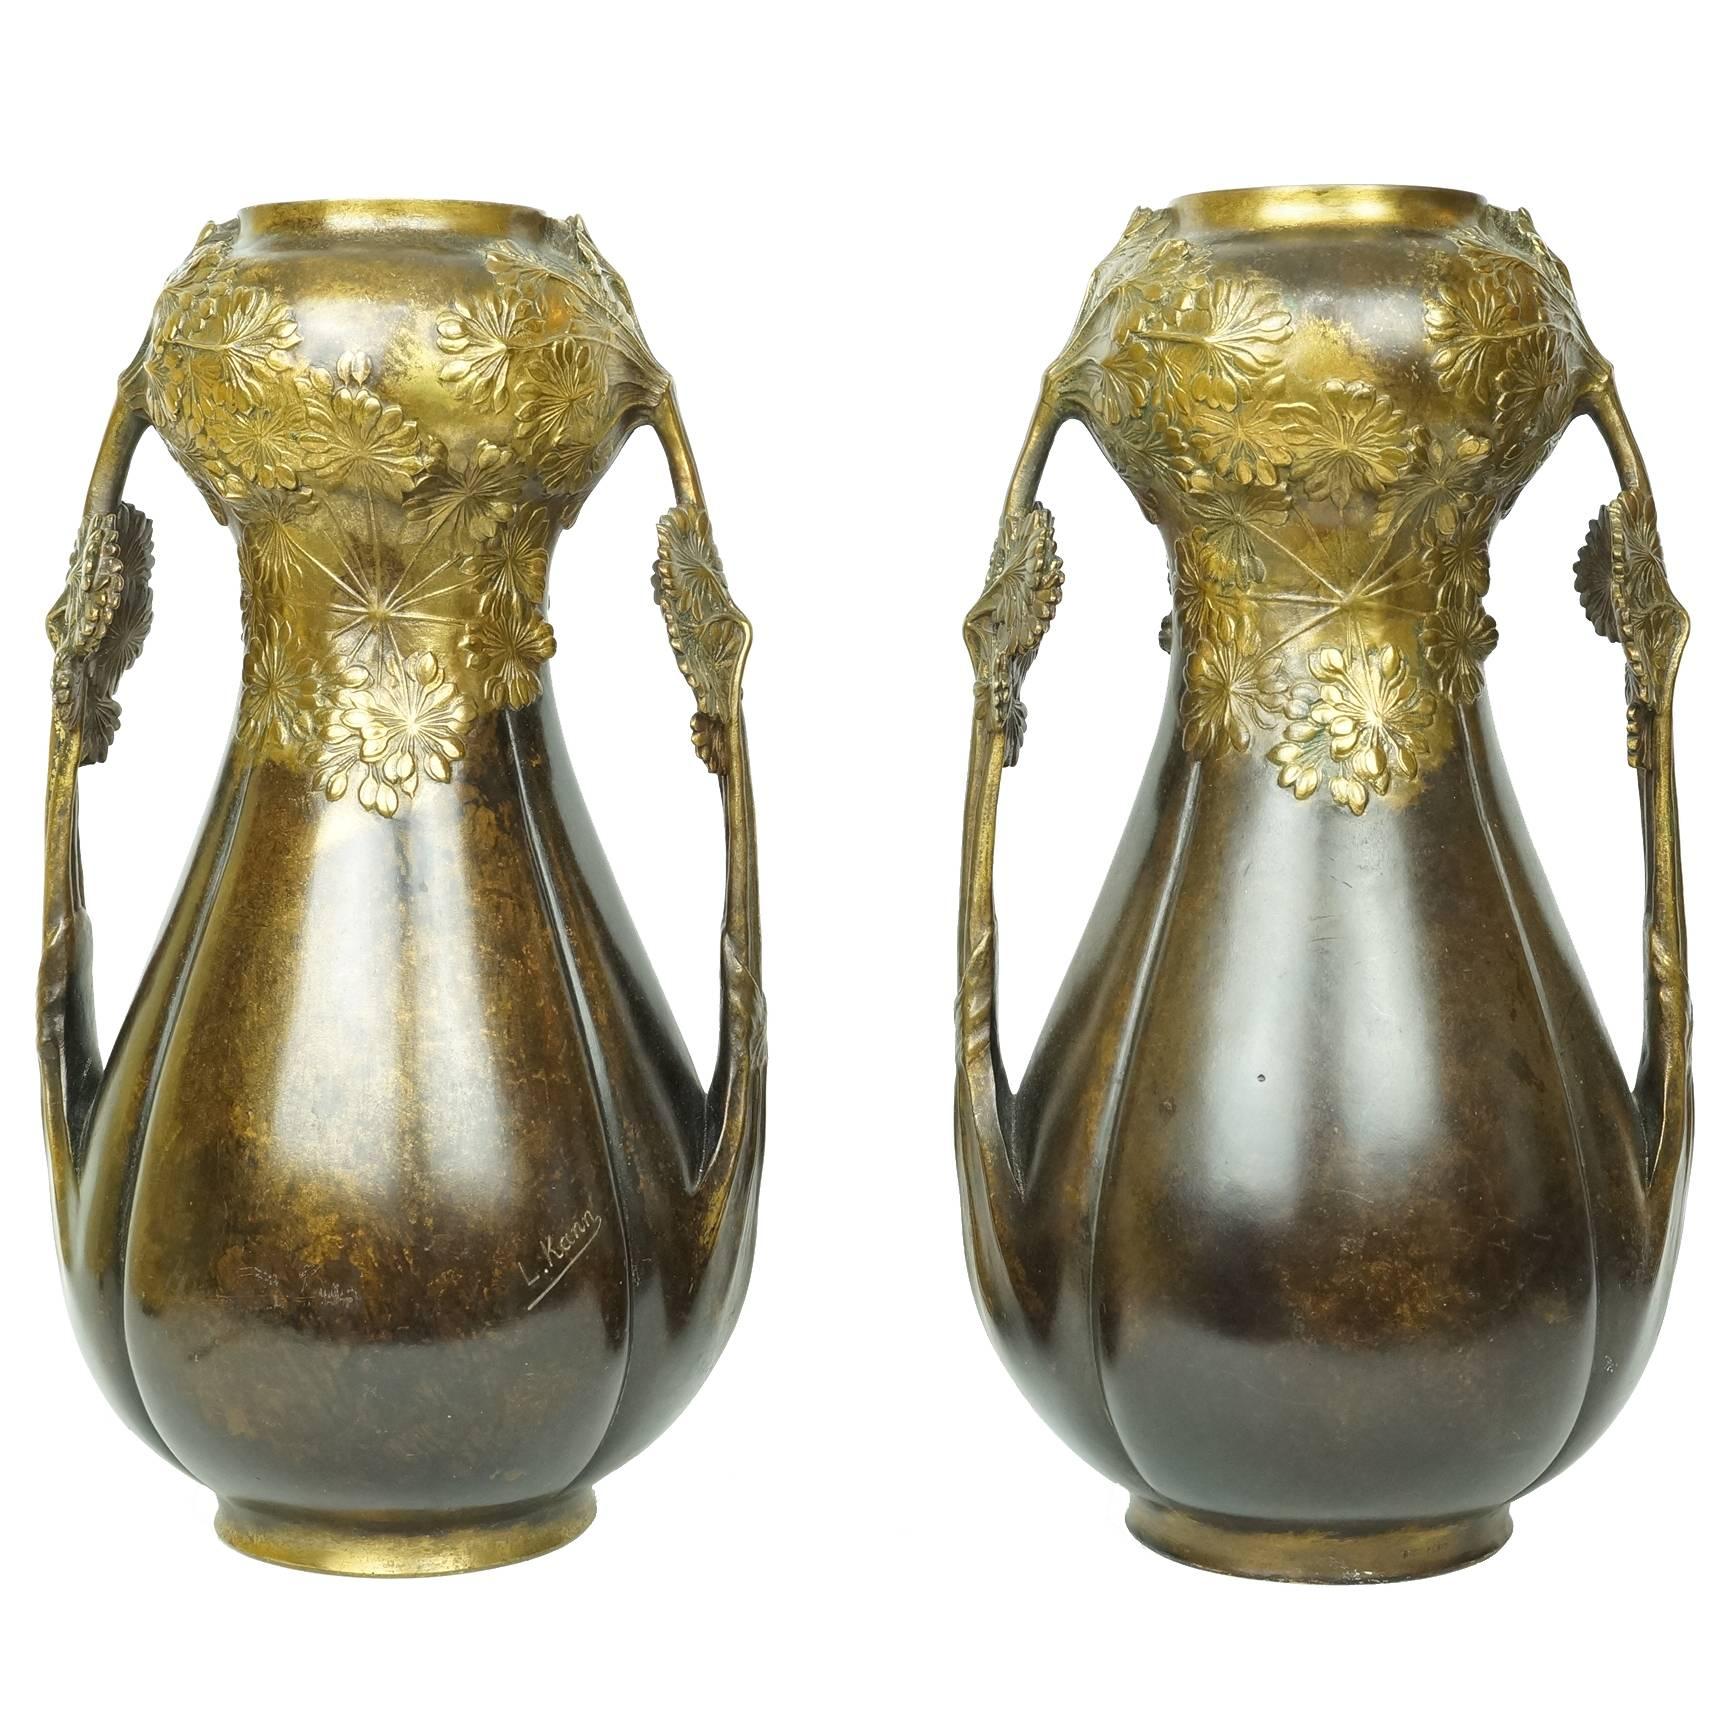 Beautiful Pair of Art Nouveau Bronze Vases with Floral Design Signed L Kann